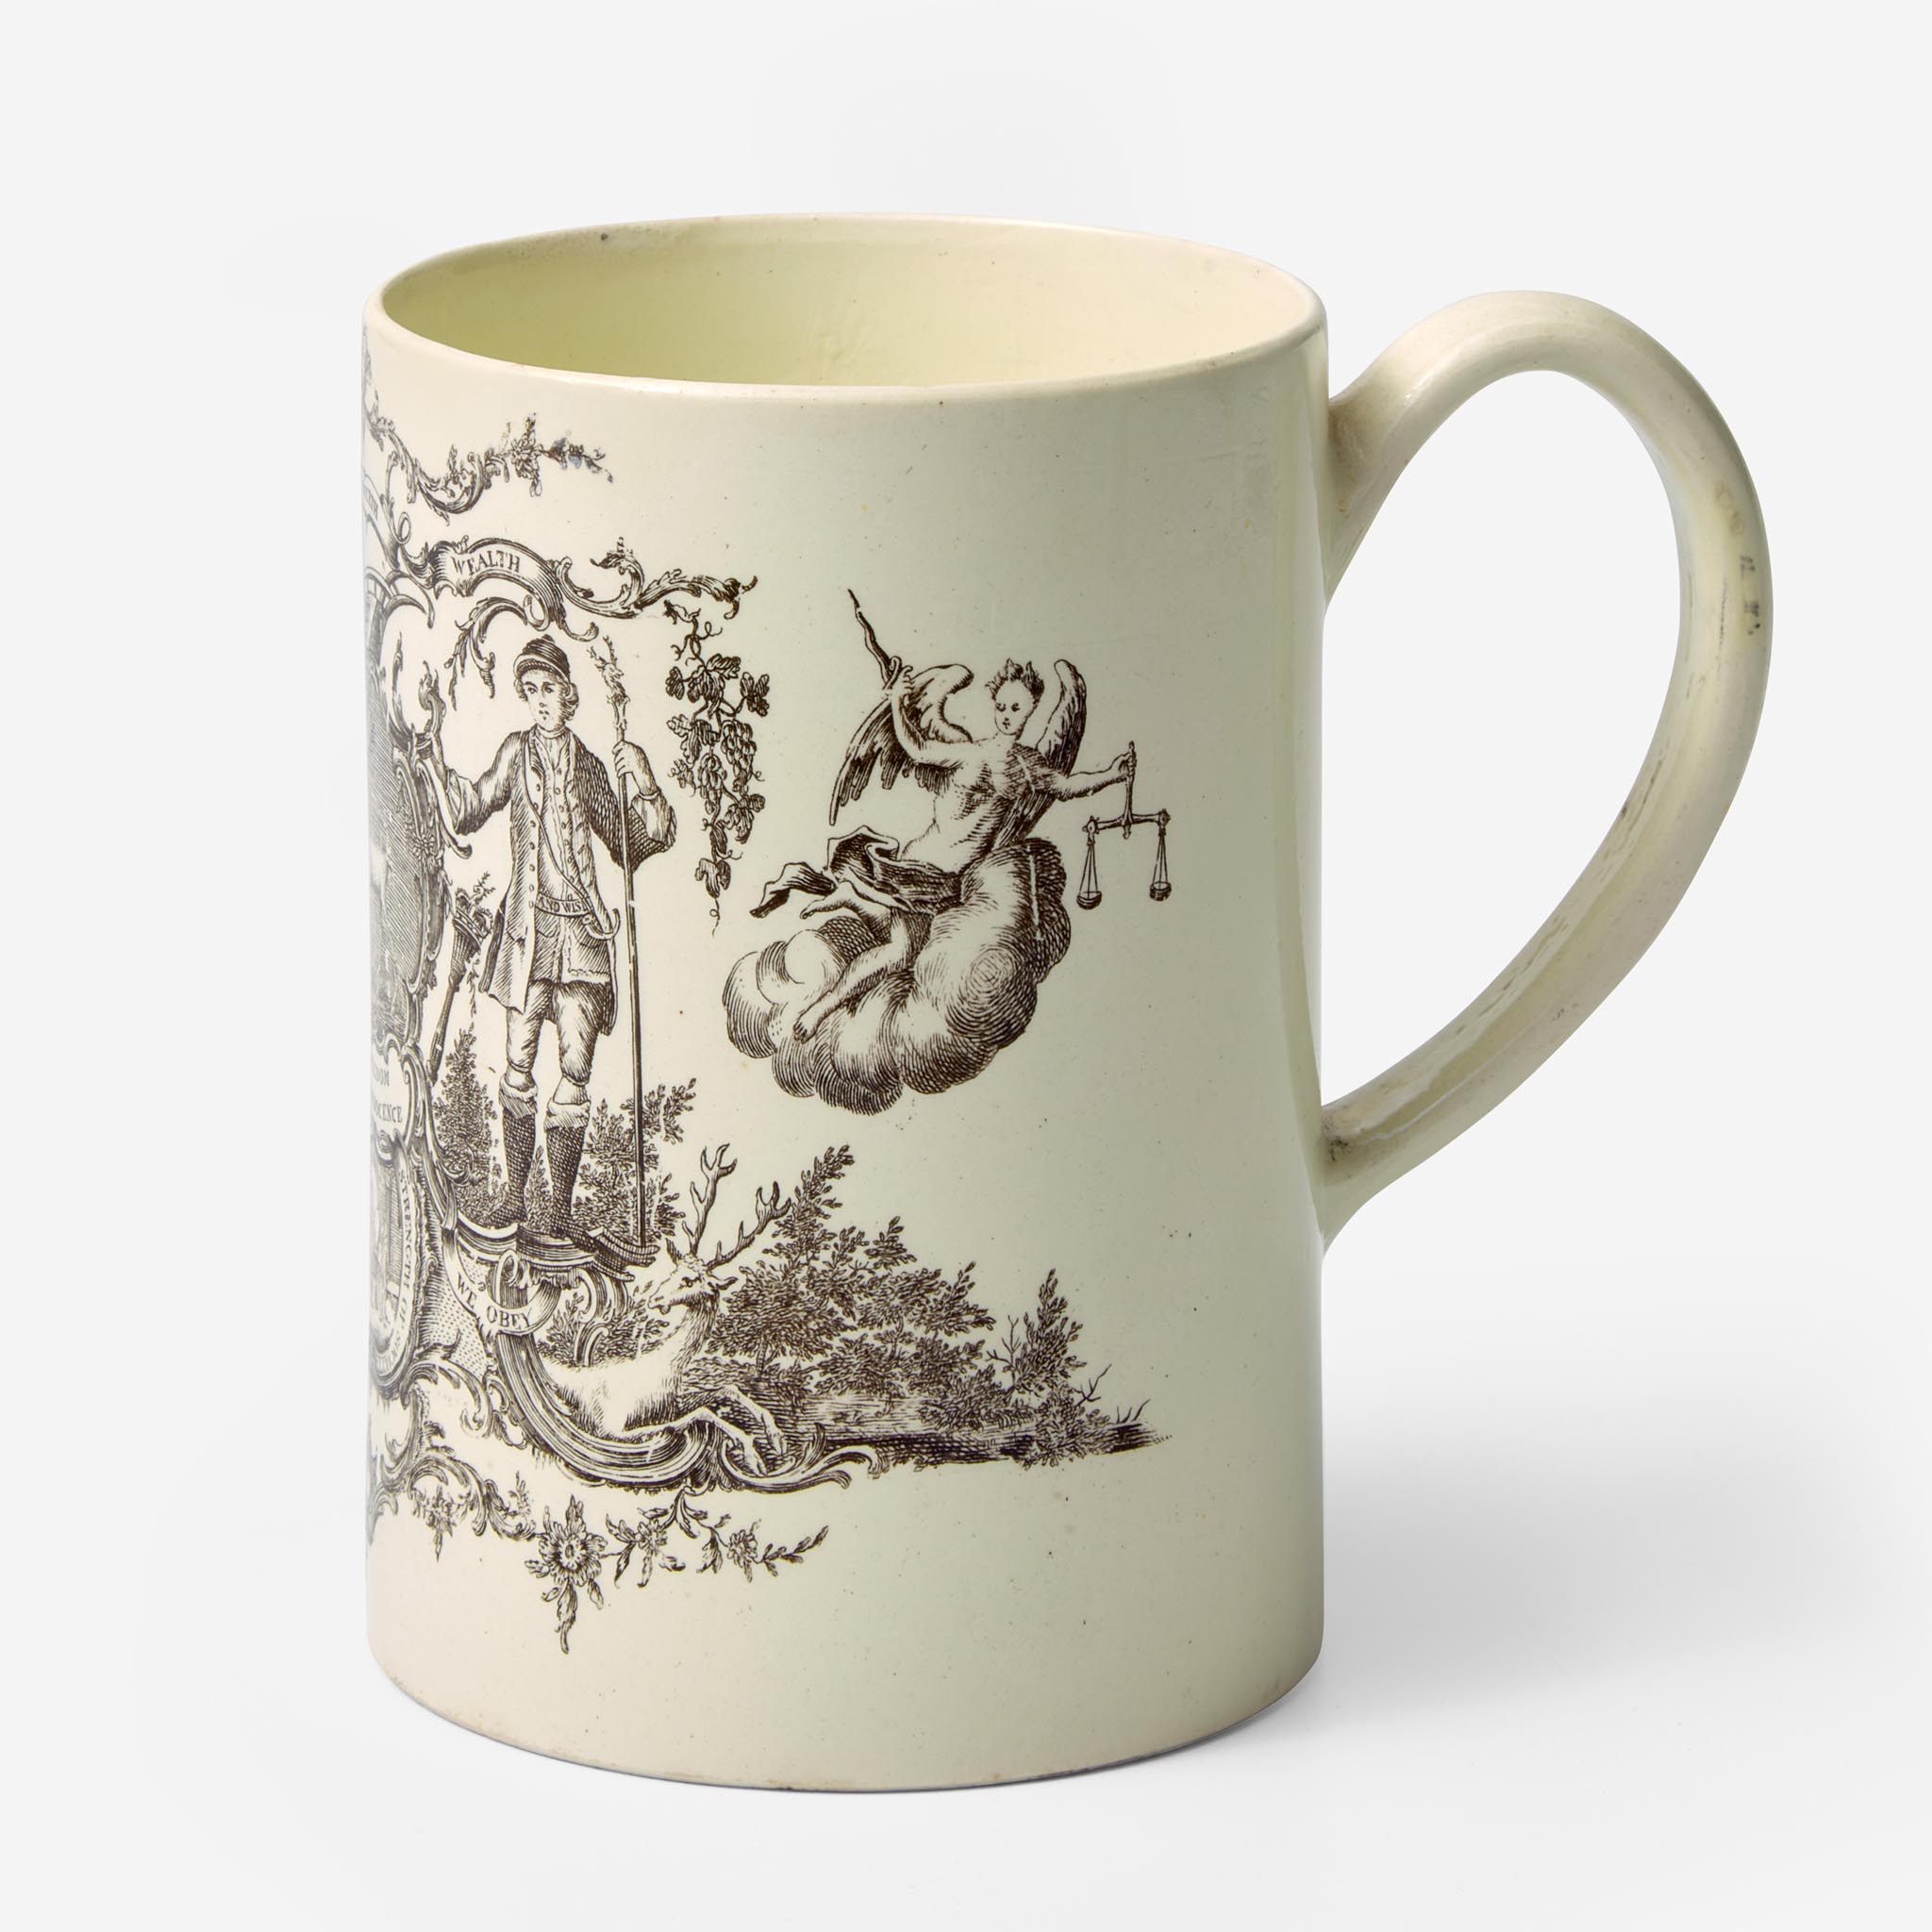 A Wedgwood Transfer-Printed Queensware Mug UK, 1760s - Image 3 of 4